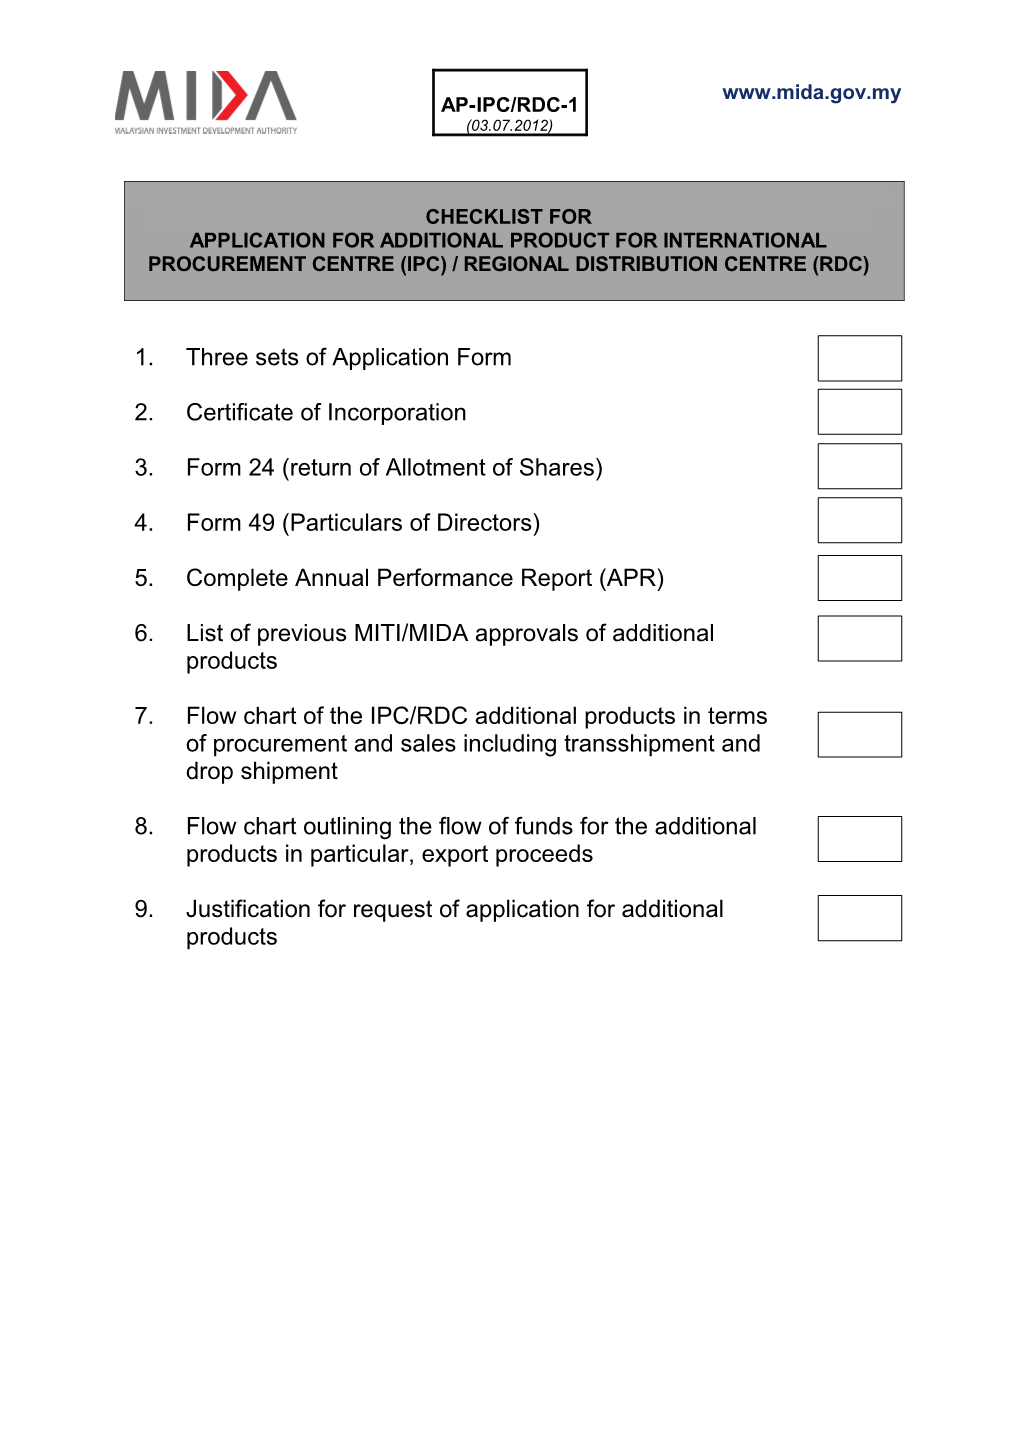 Application for International Procurement Centre (Ipc) Status / Tax Incentives